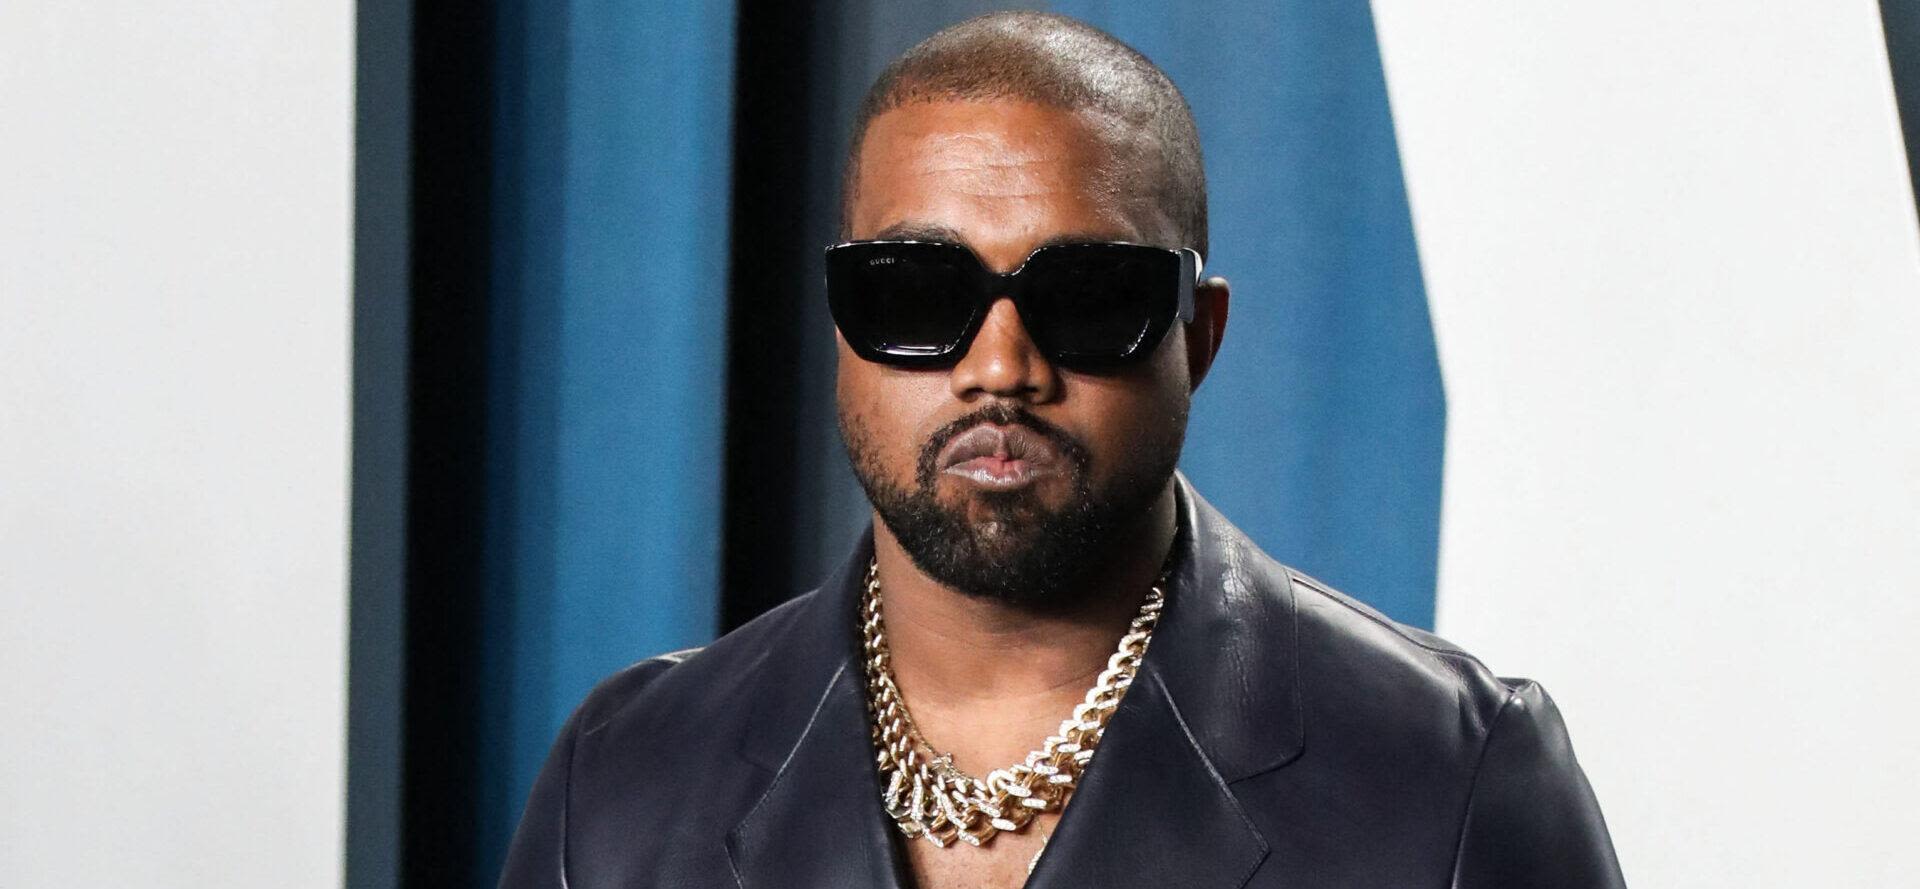 Kanye West Shuts Down His Social Media Accounts Amid Fan Backlash Over 'Yeezy Porn'